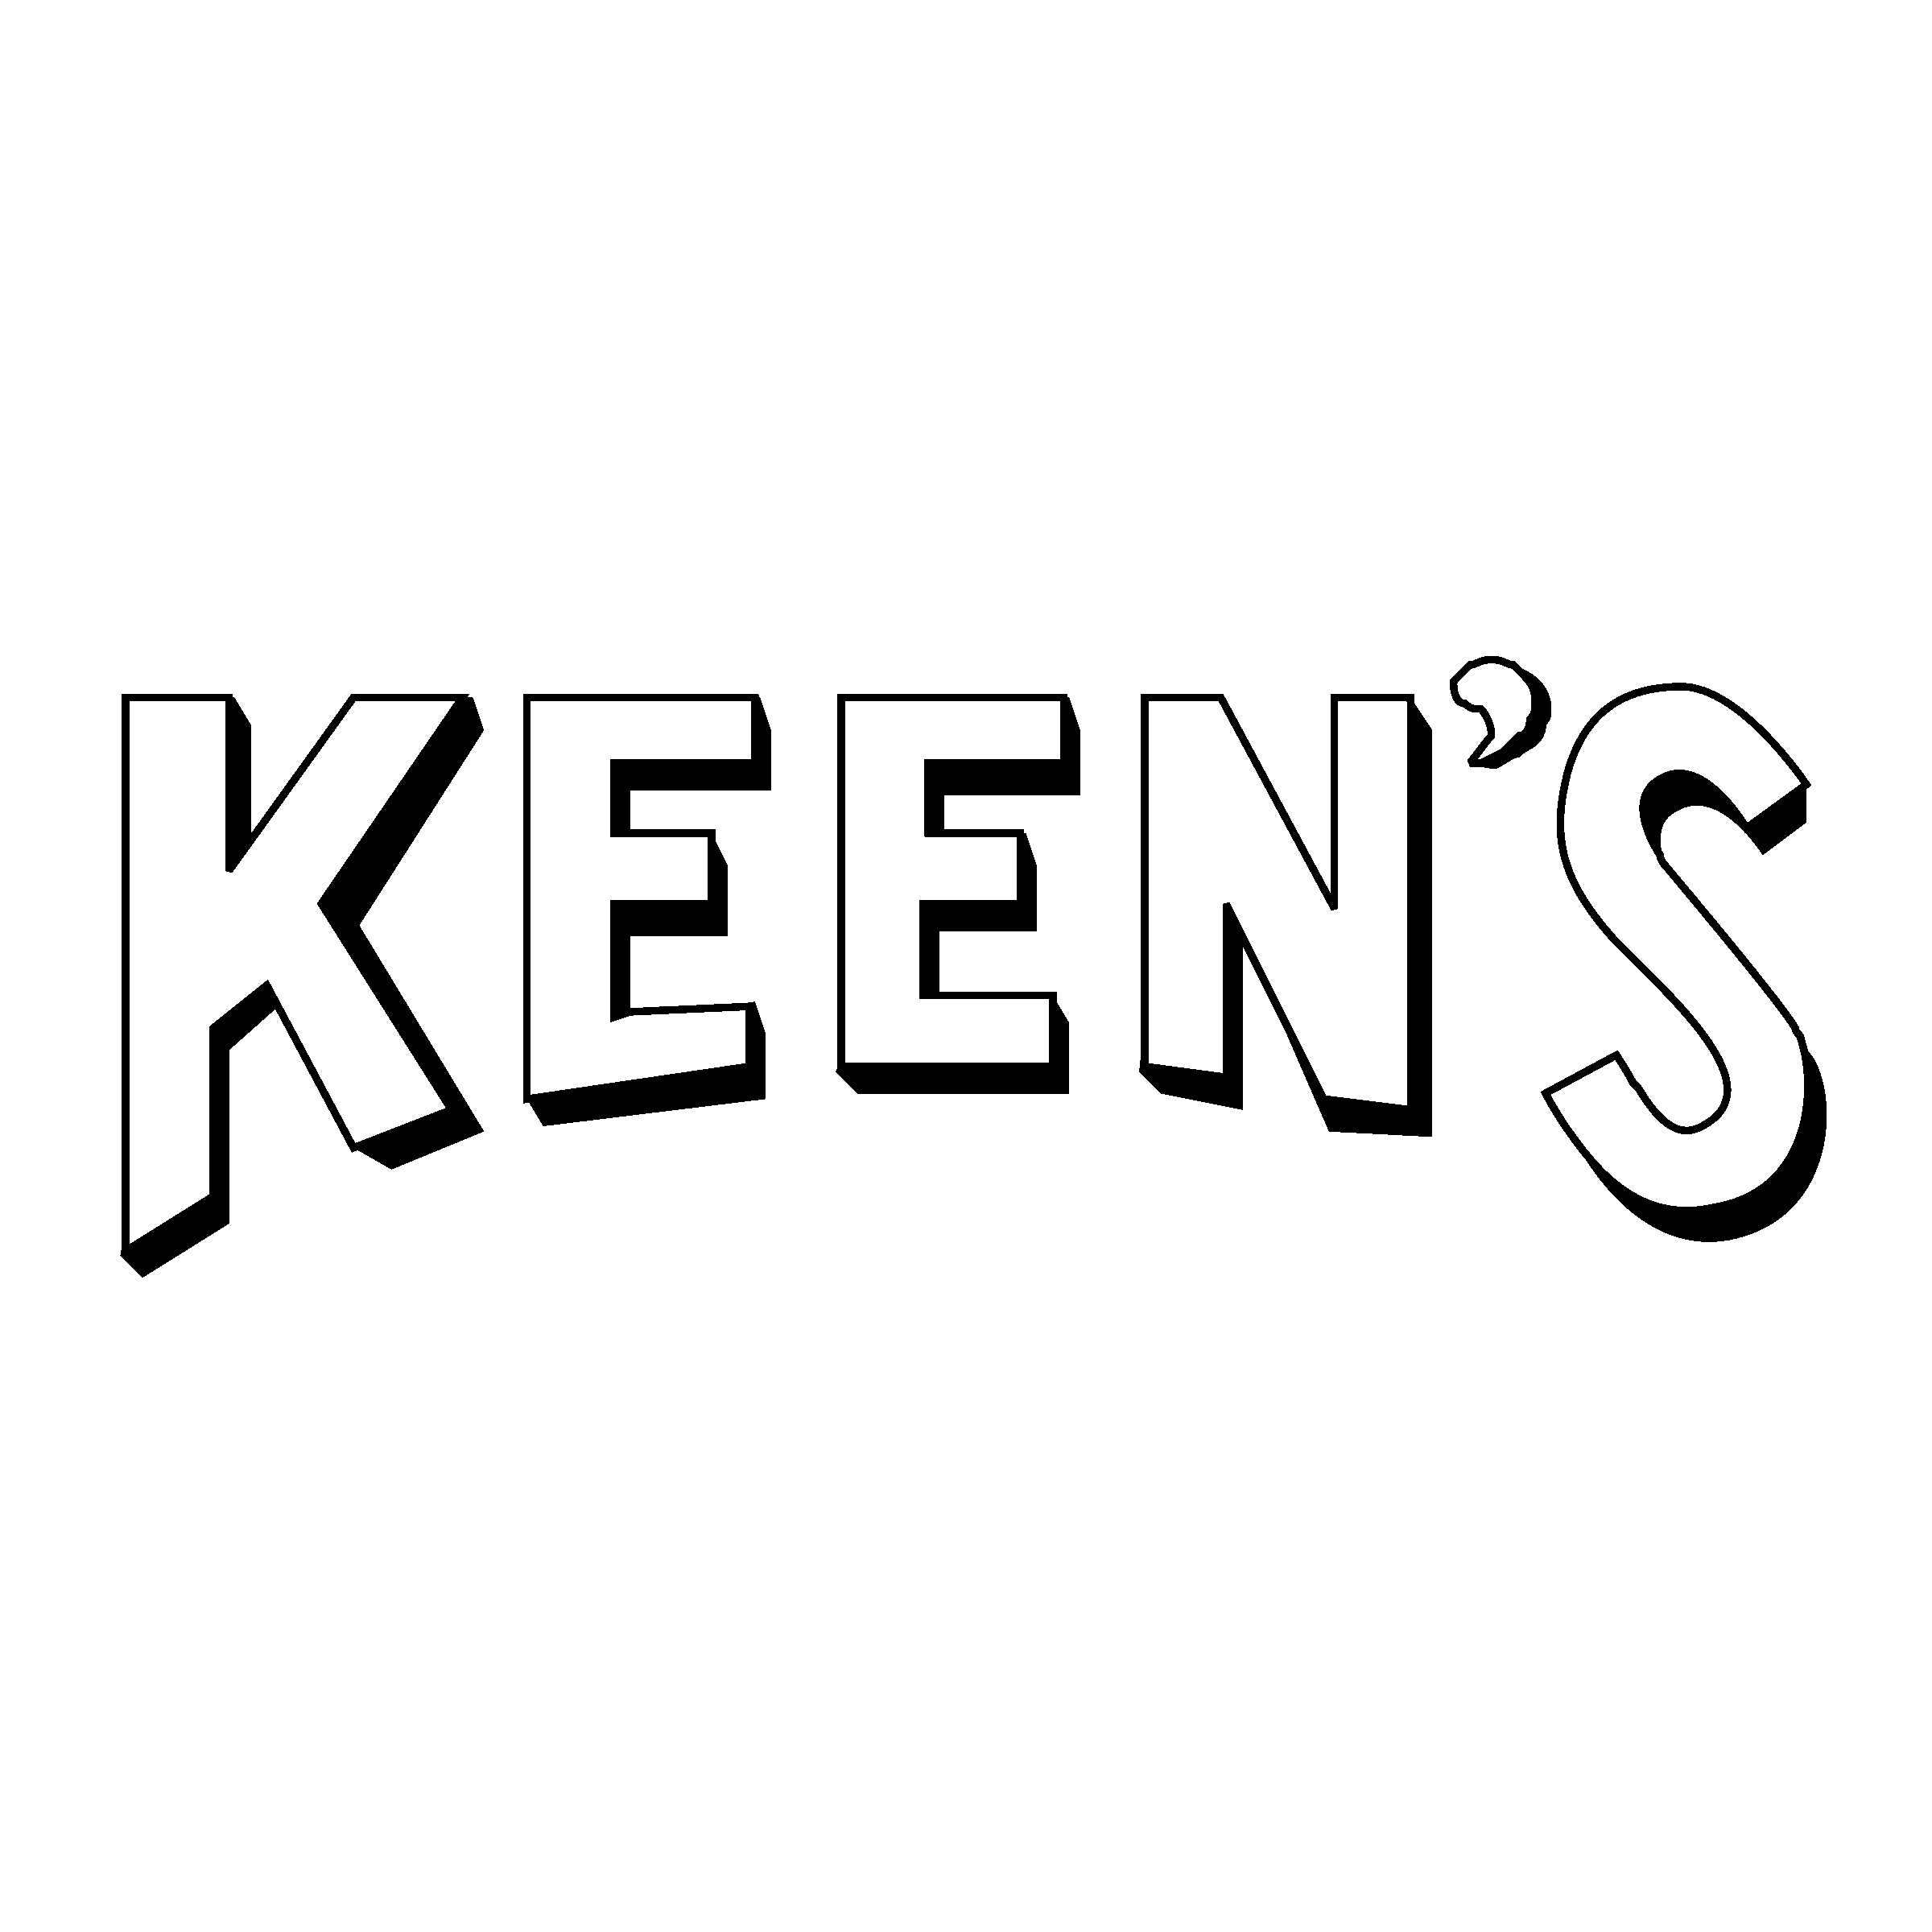 Keen.com Logo - Keen's Logo PNG Transparent & SVG Vector